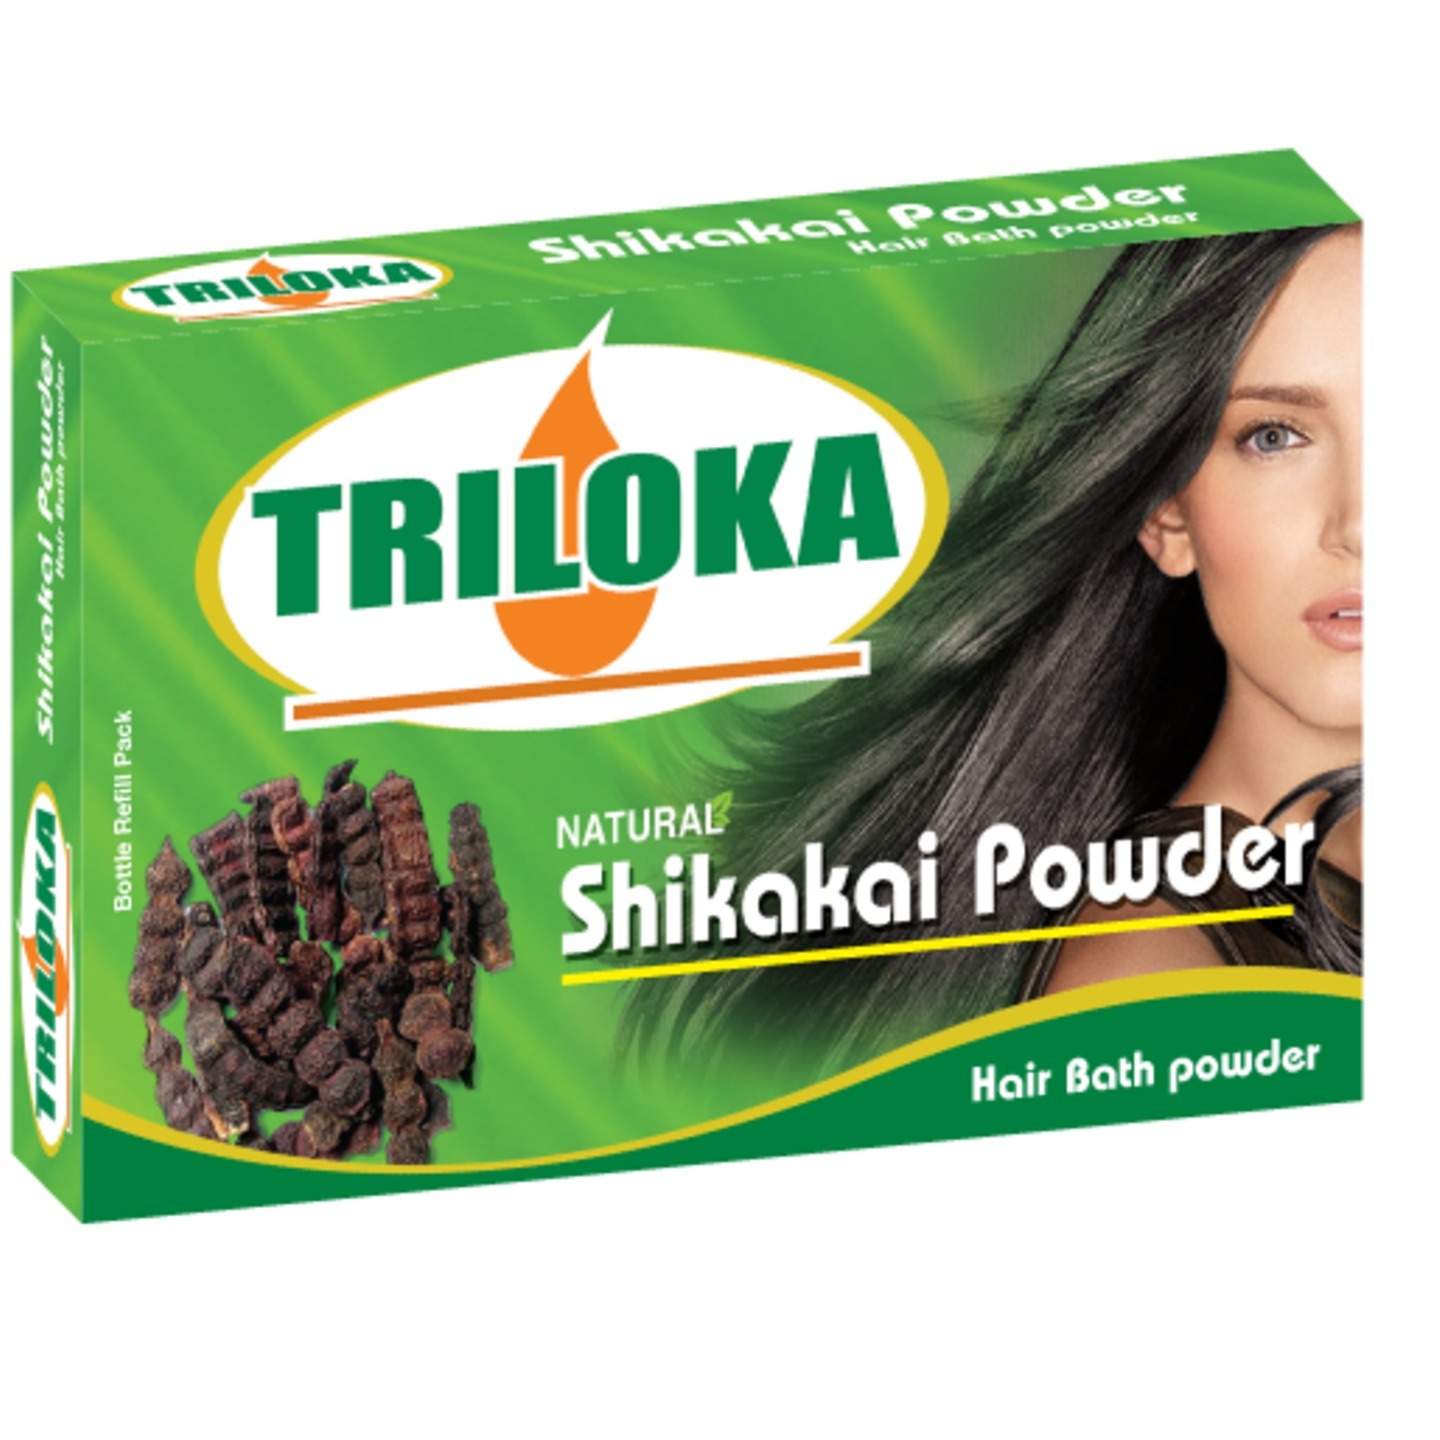 New Triloka Shikakai  Head Bathing Powder Shampoo Powder Refill Pack - 1 Case